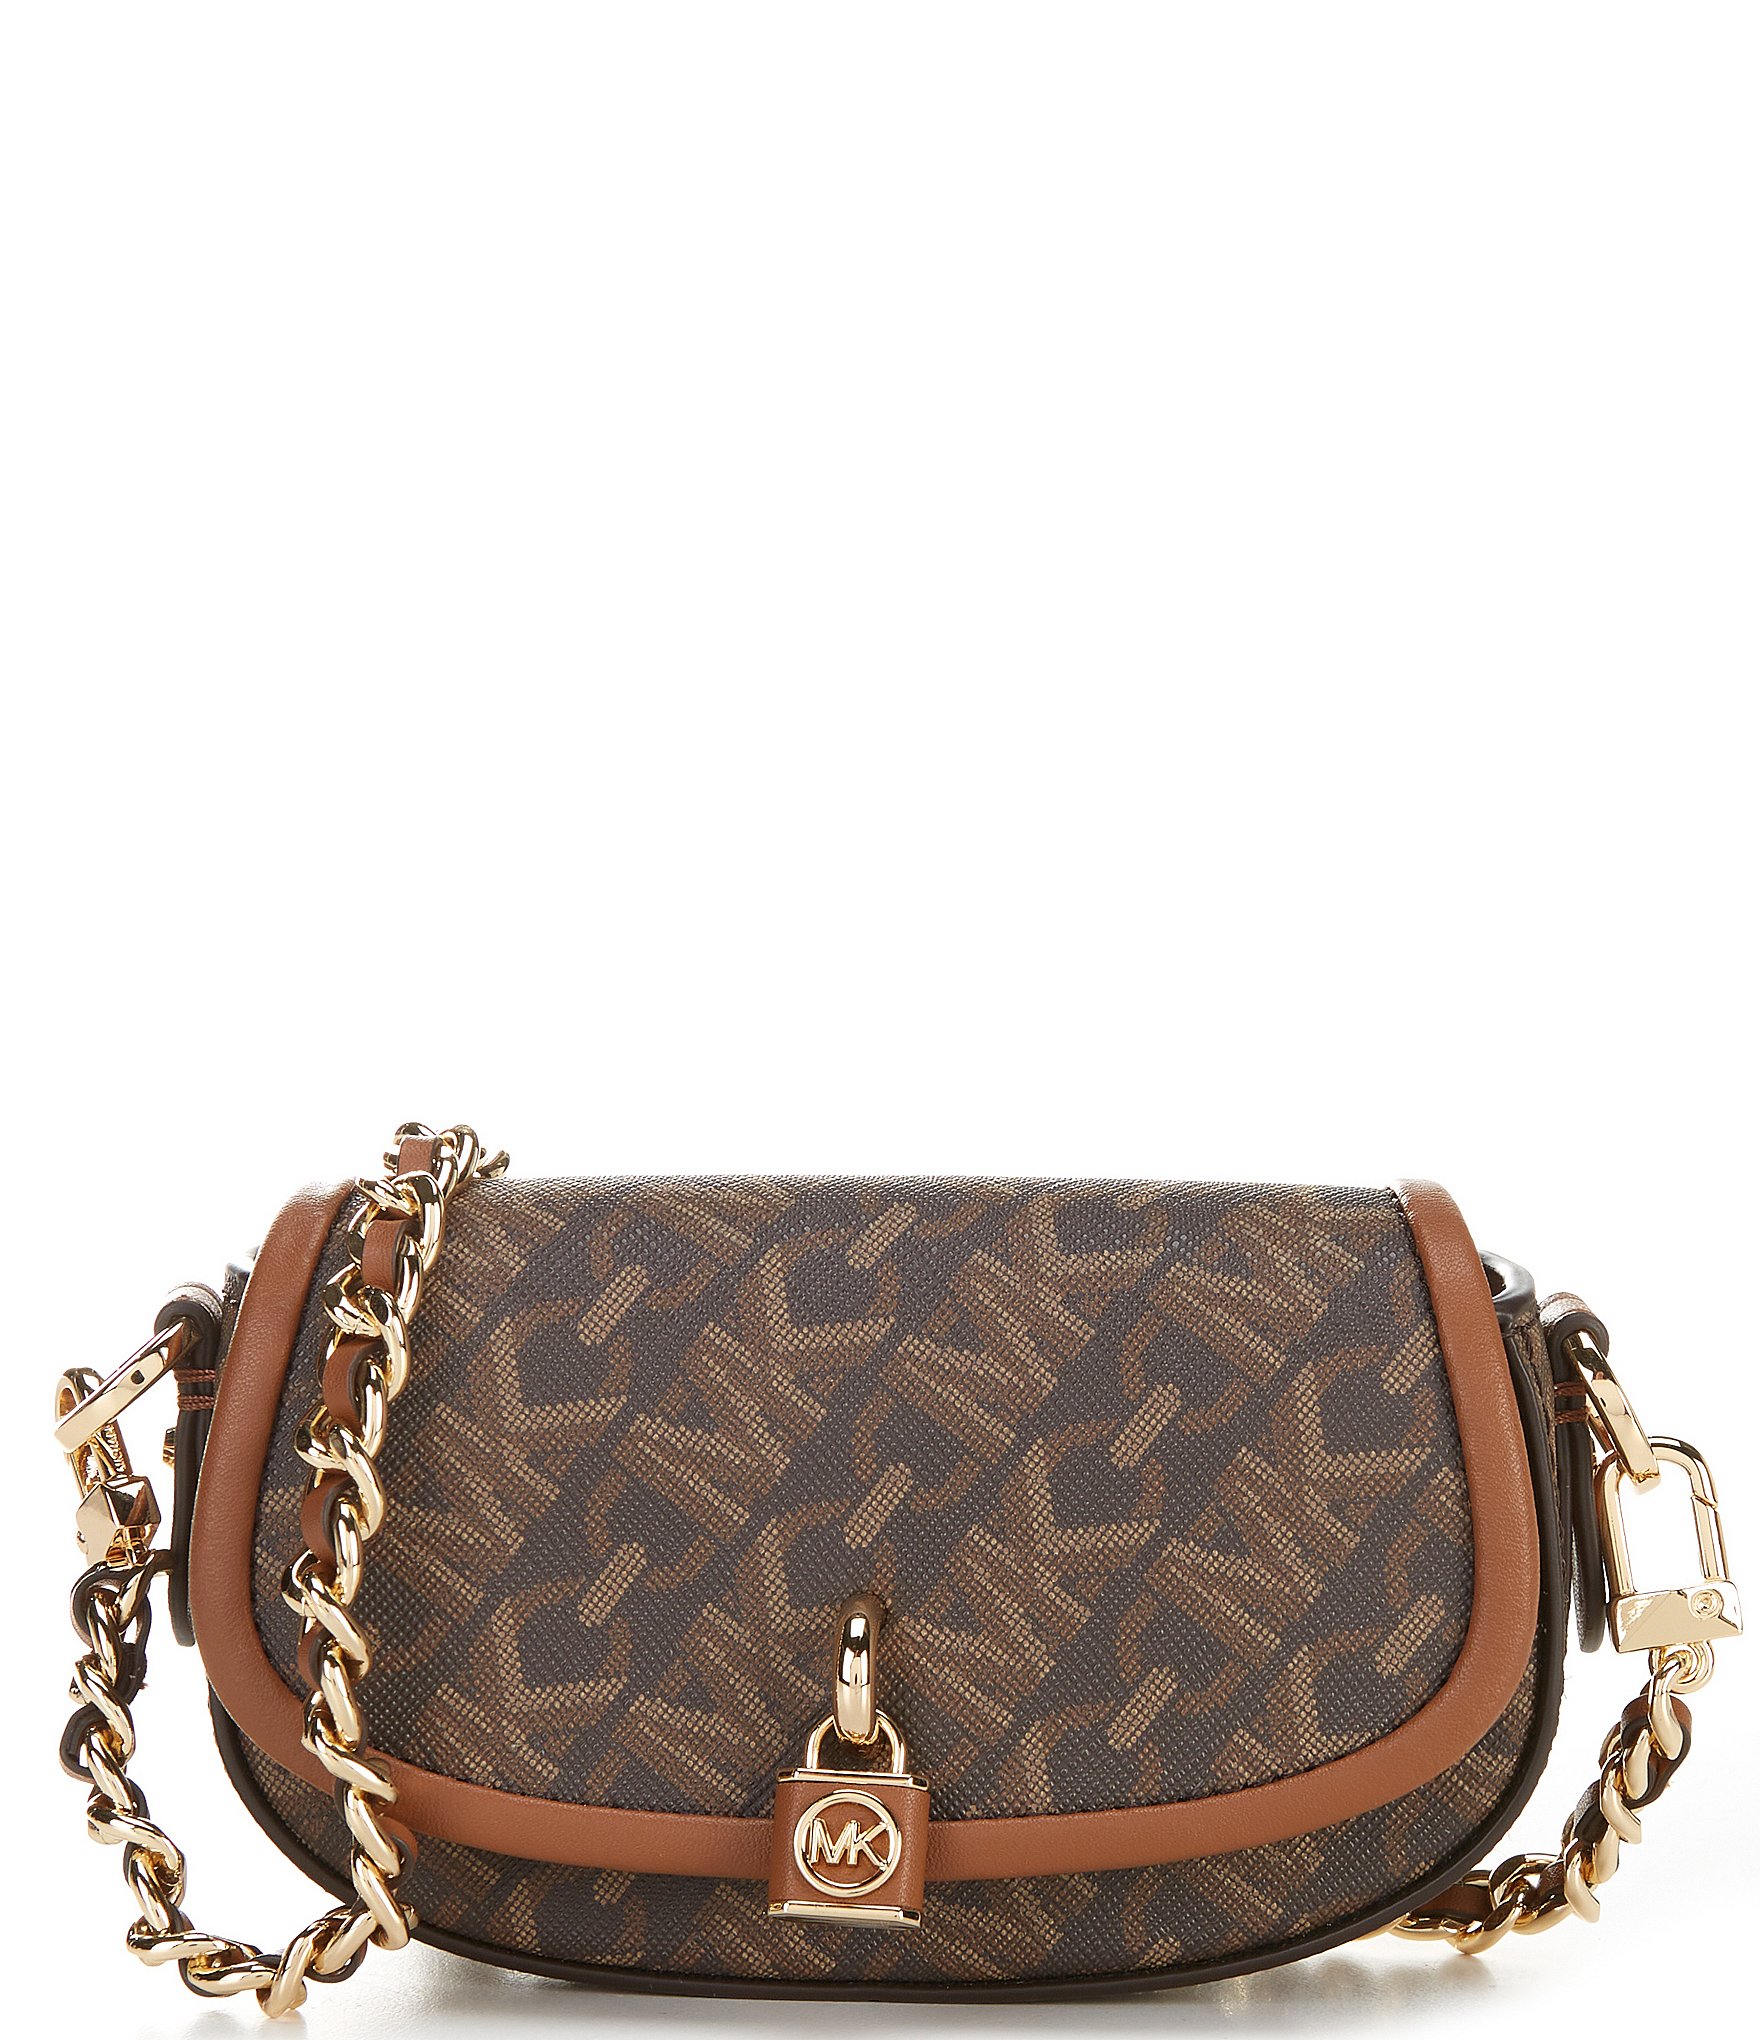 Does Dillards Sell Louis Vuitton Handbags